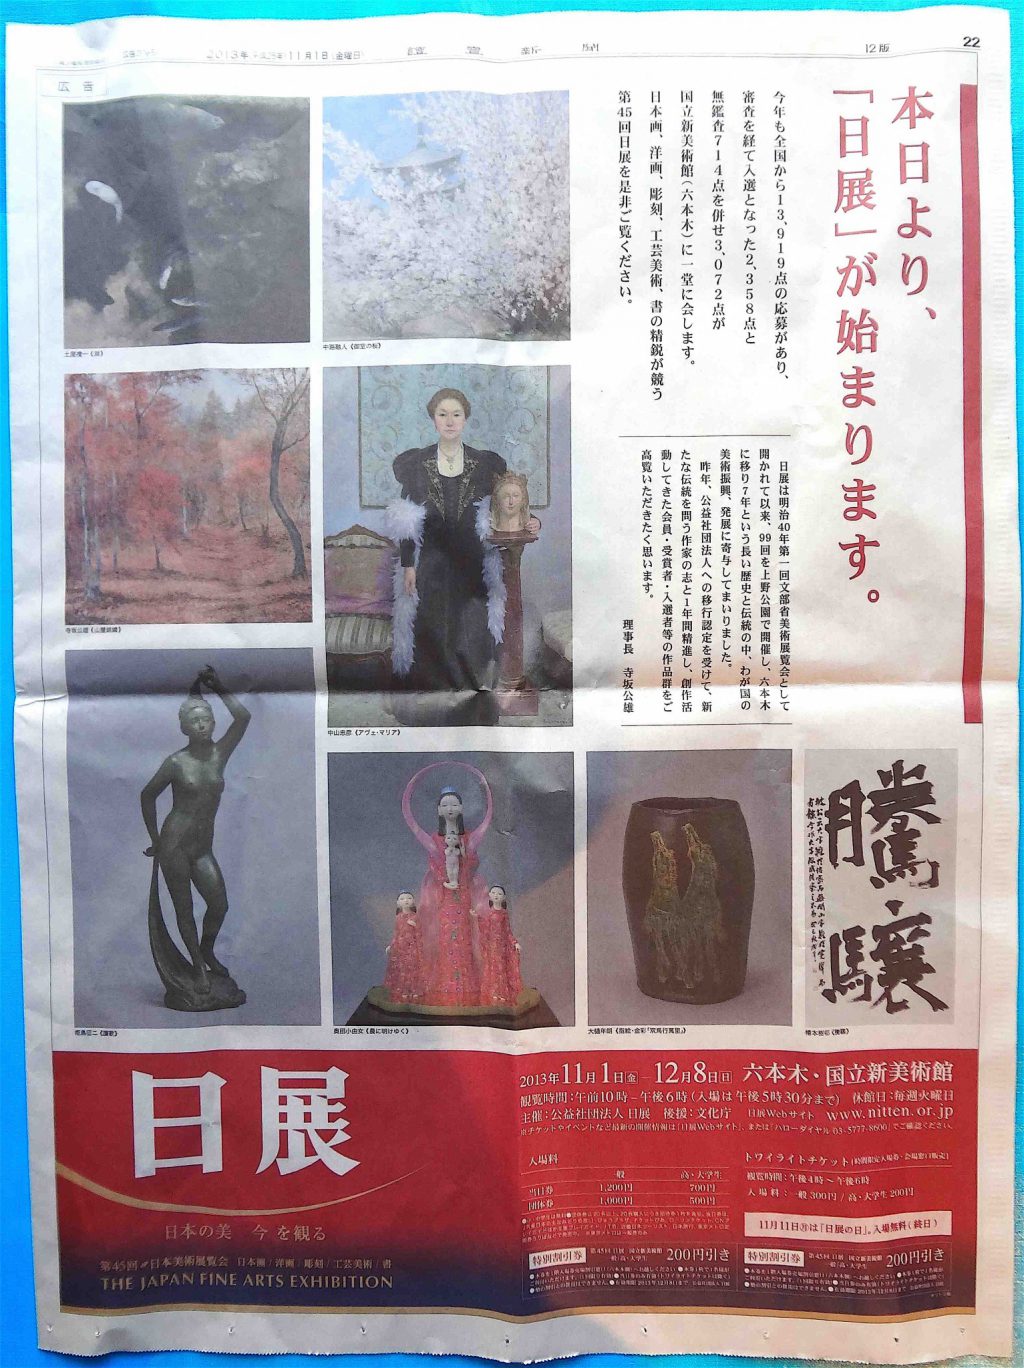 2013年11月1日の読売新聞、第45回 日本美術展覧会 (日展)の広告